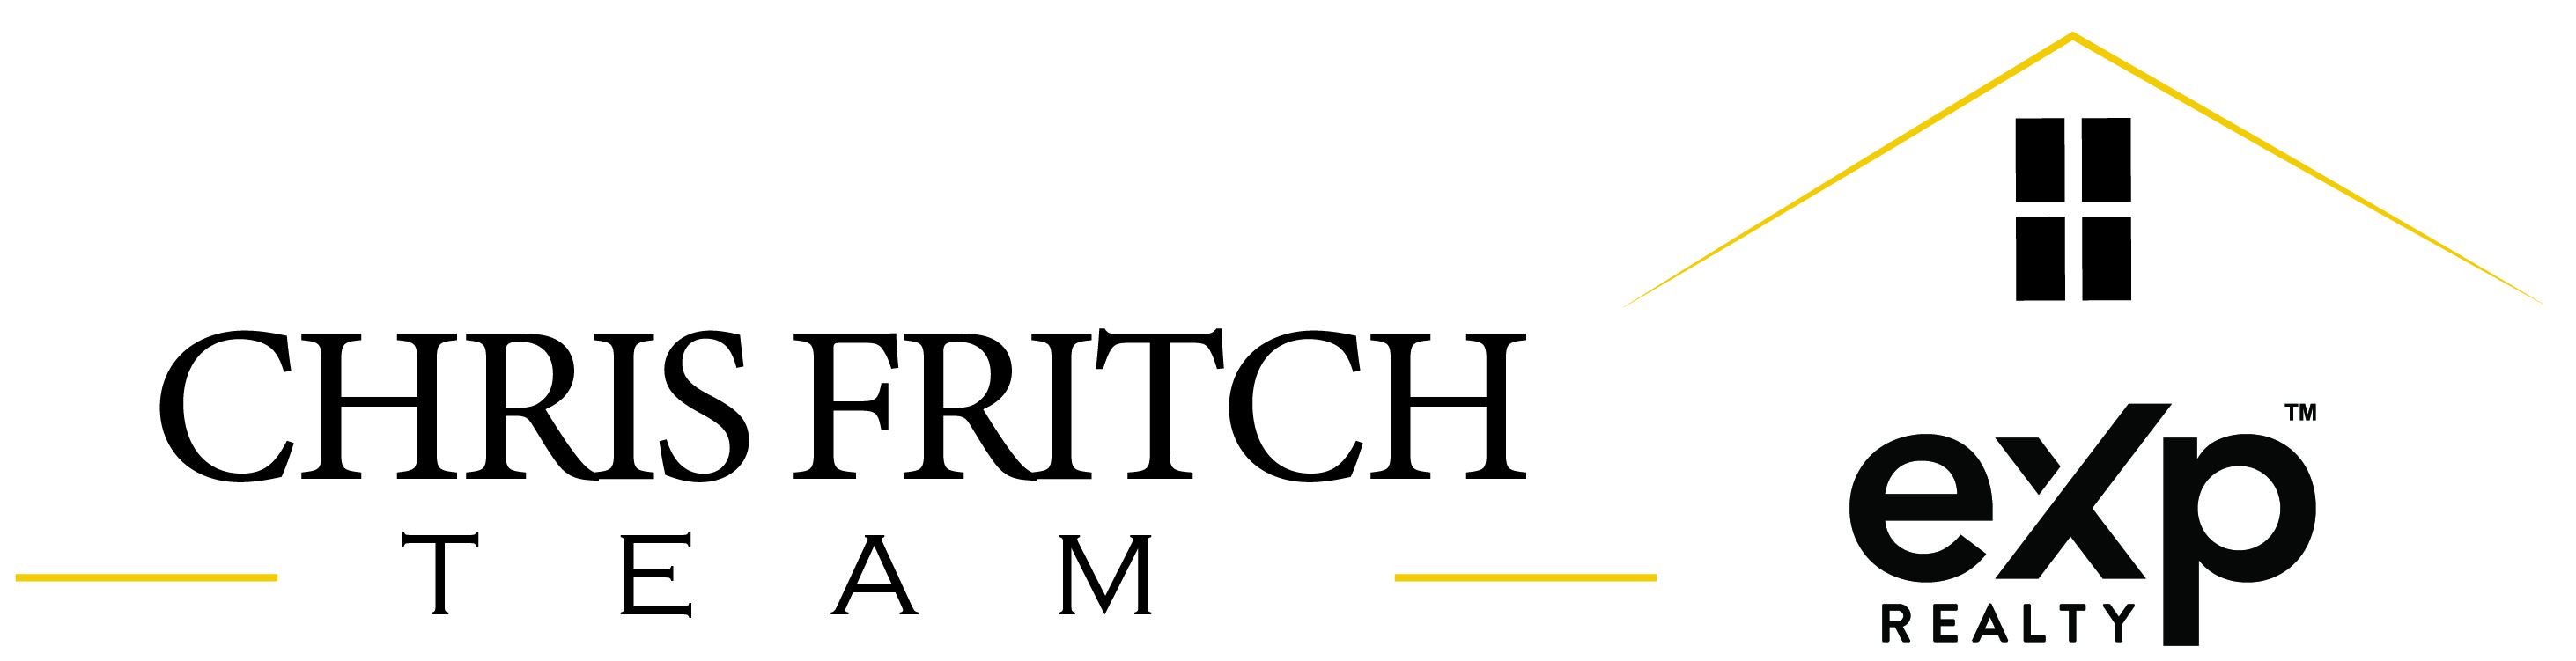 6Chris Fritch